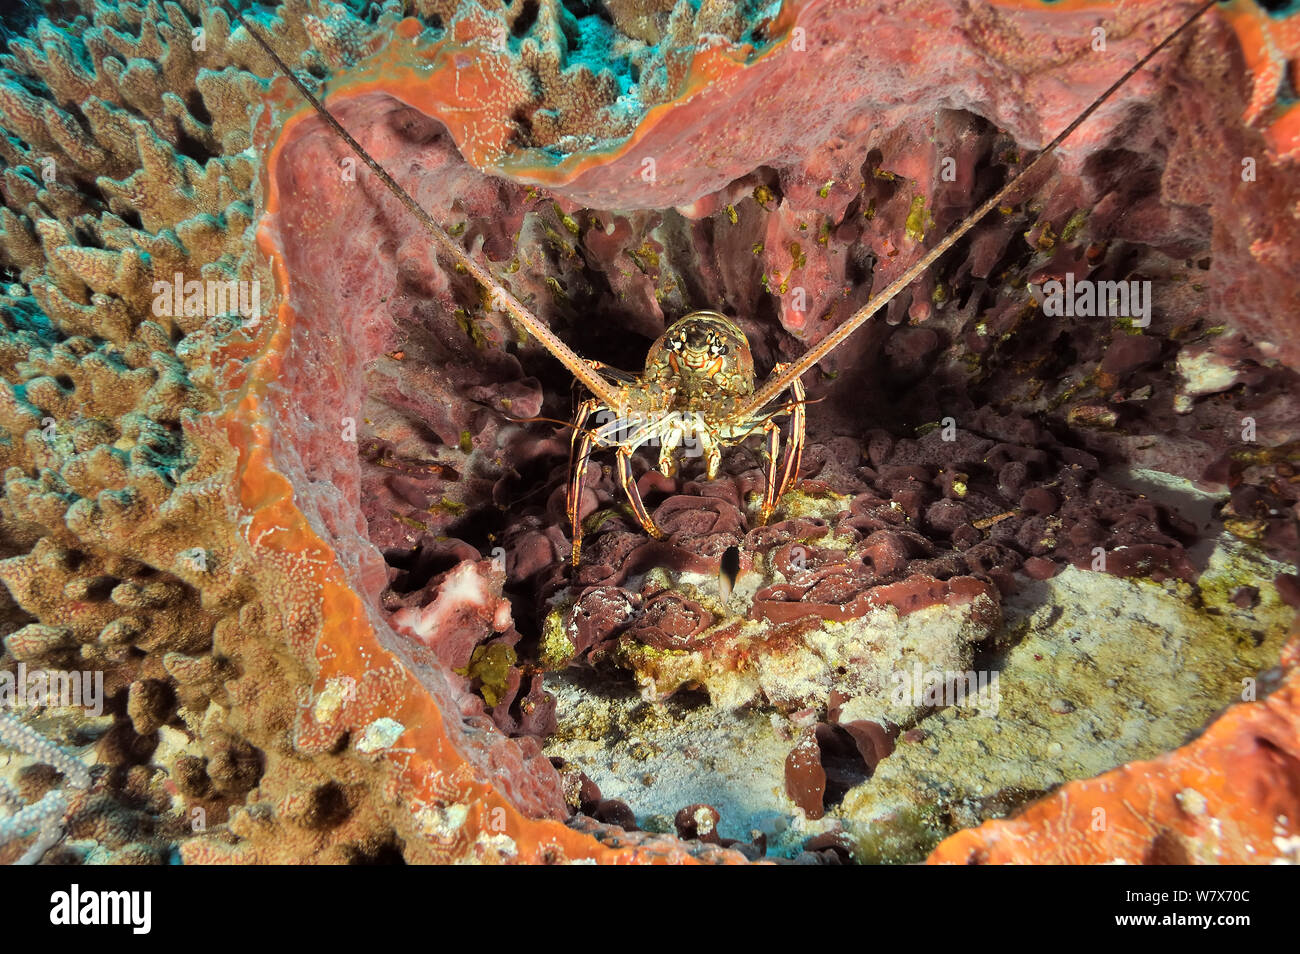 Caribbean spiny lobster (Panulirus argus) in a giant barrel sponge (Xestospongia muta), San Salvador Island / Colombus Island, Bahamas. Caribbean. Stock Photo